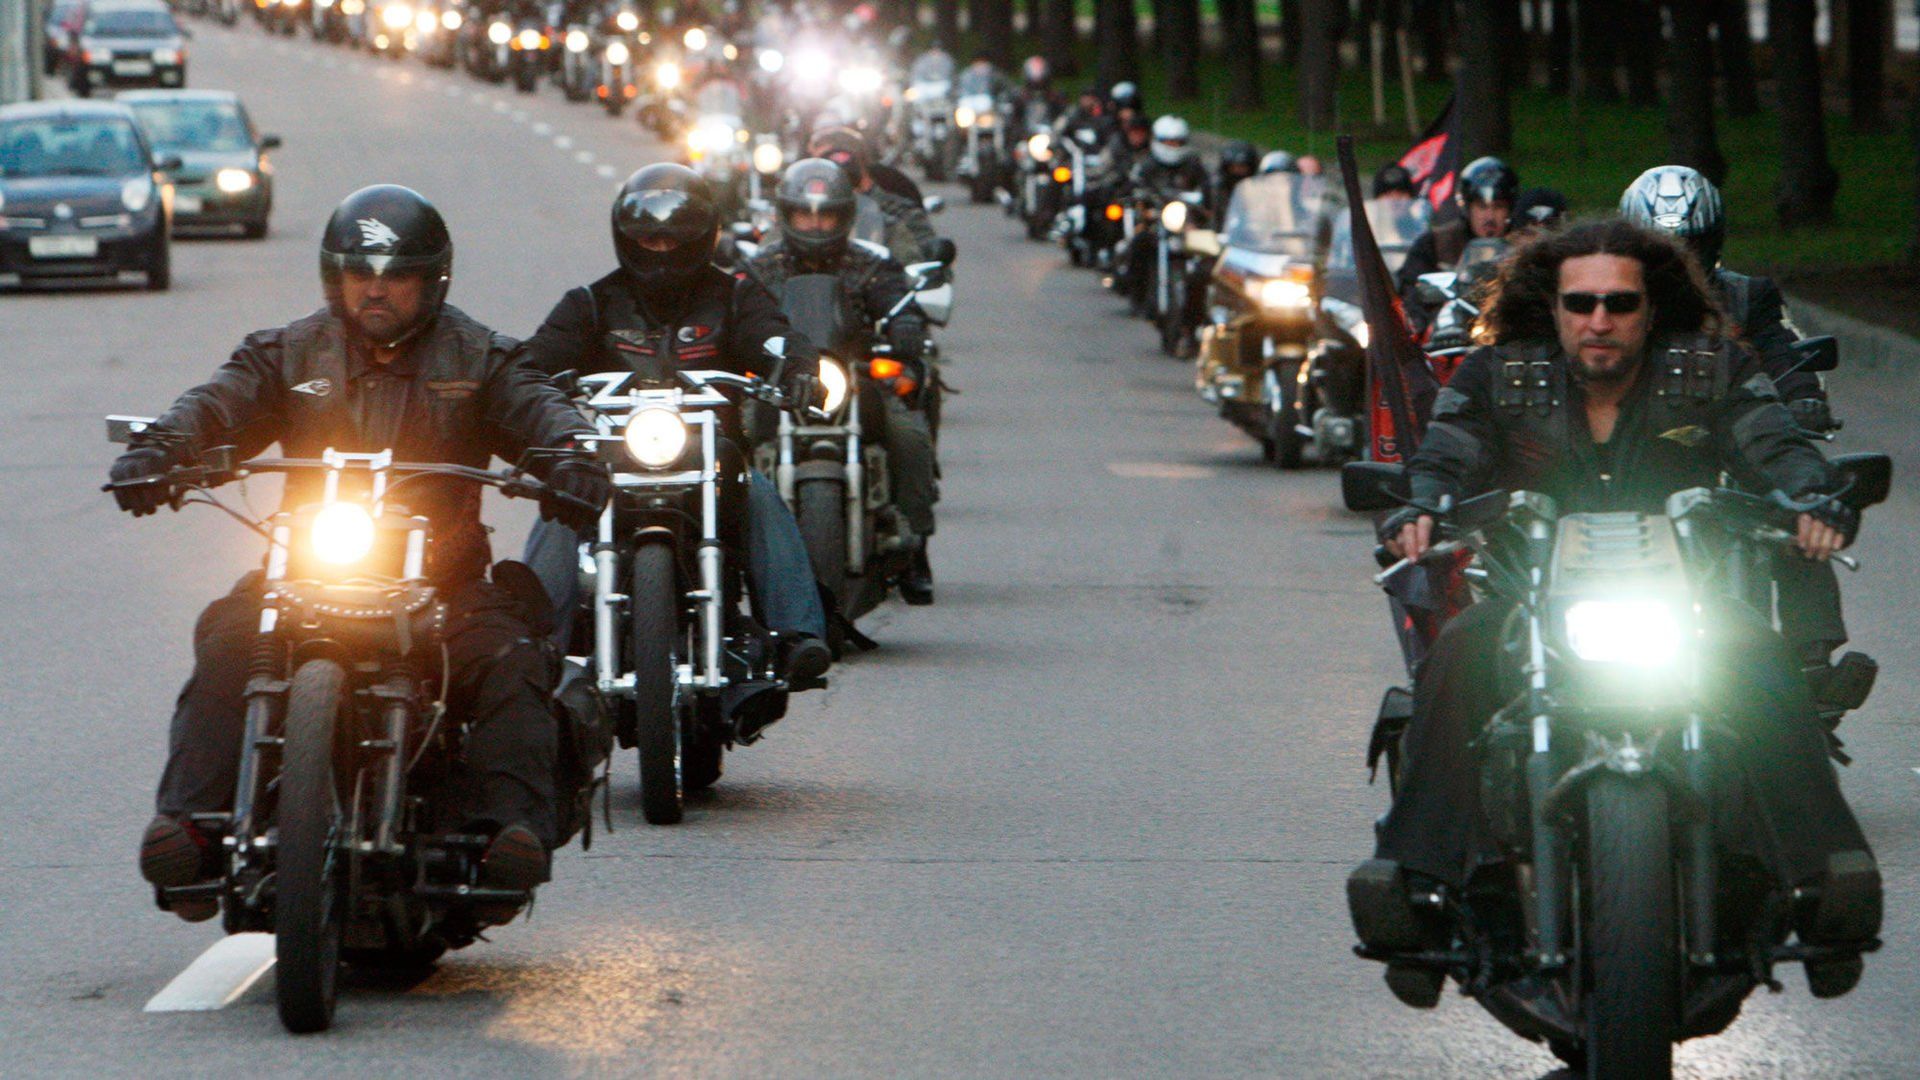 World's biggest biker gang